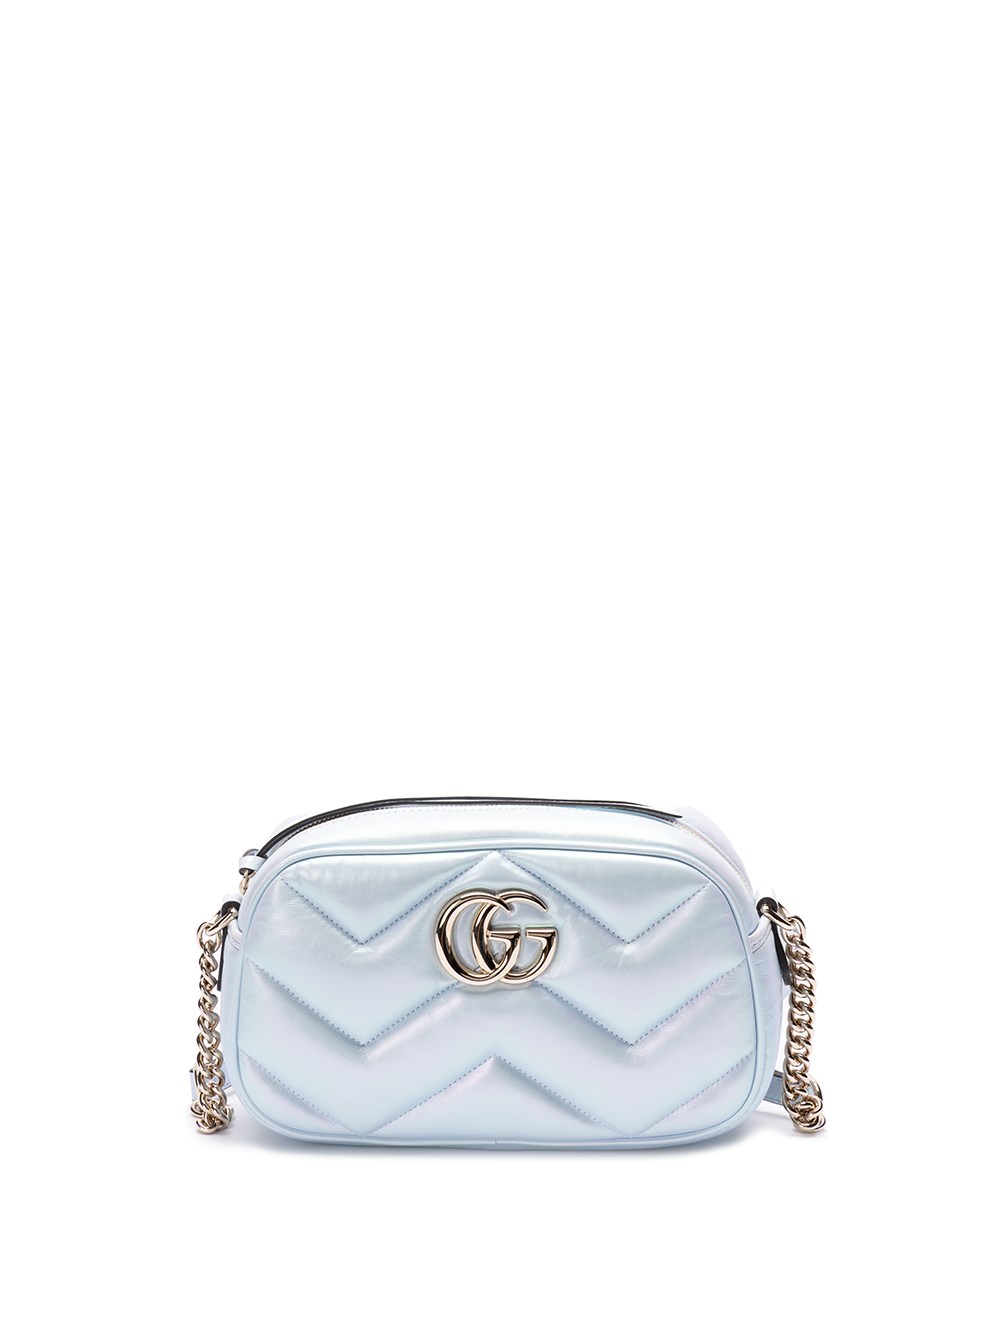 Gucci `gg Marmont` Shoulder Bag In Multi